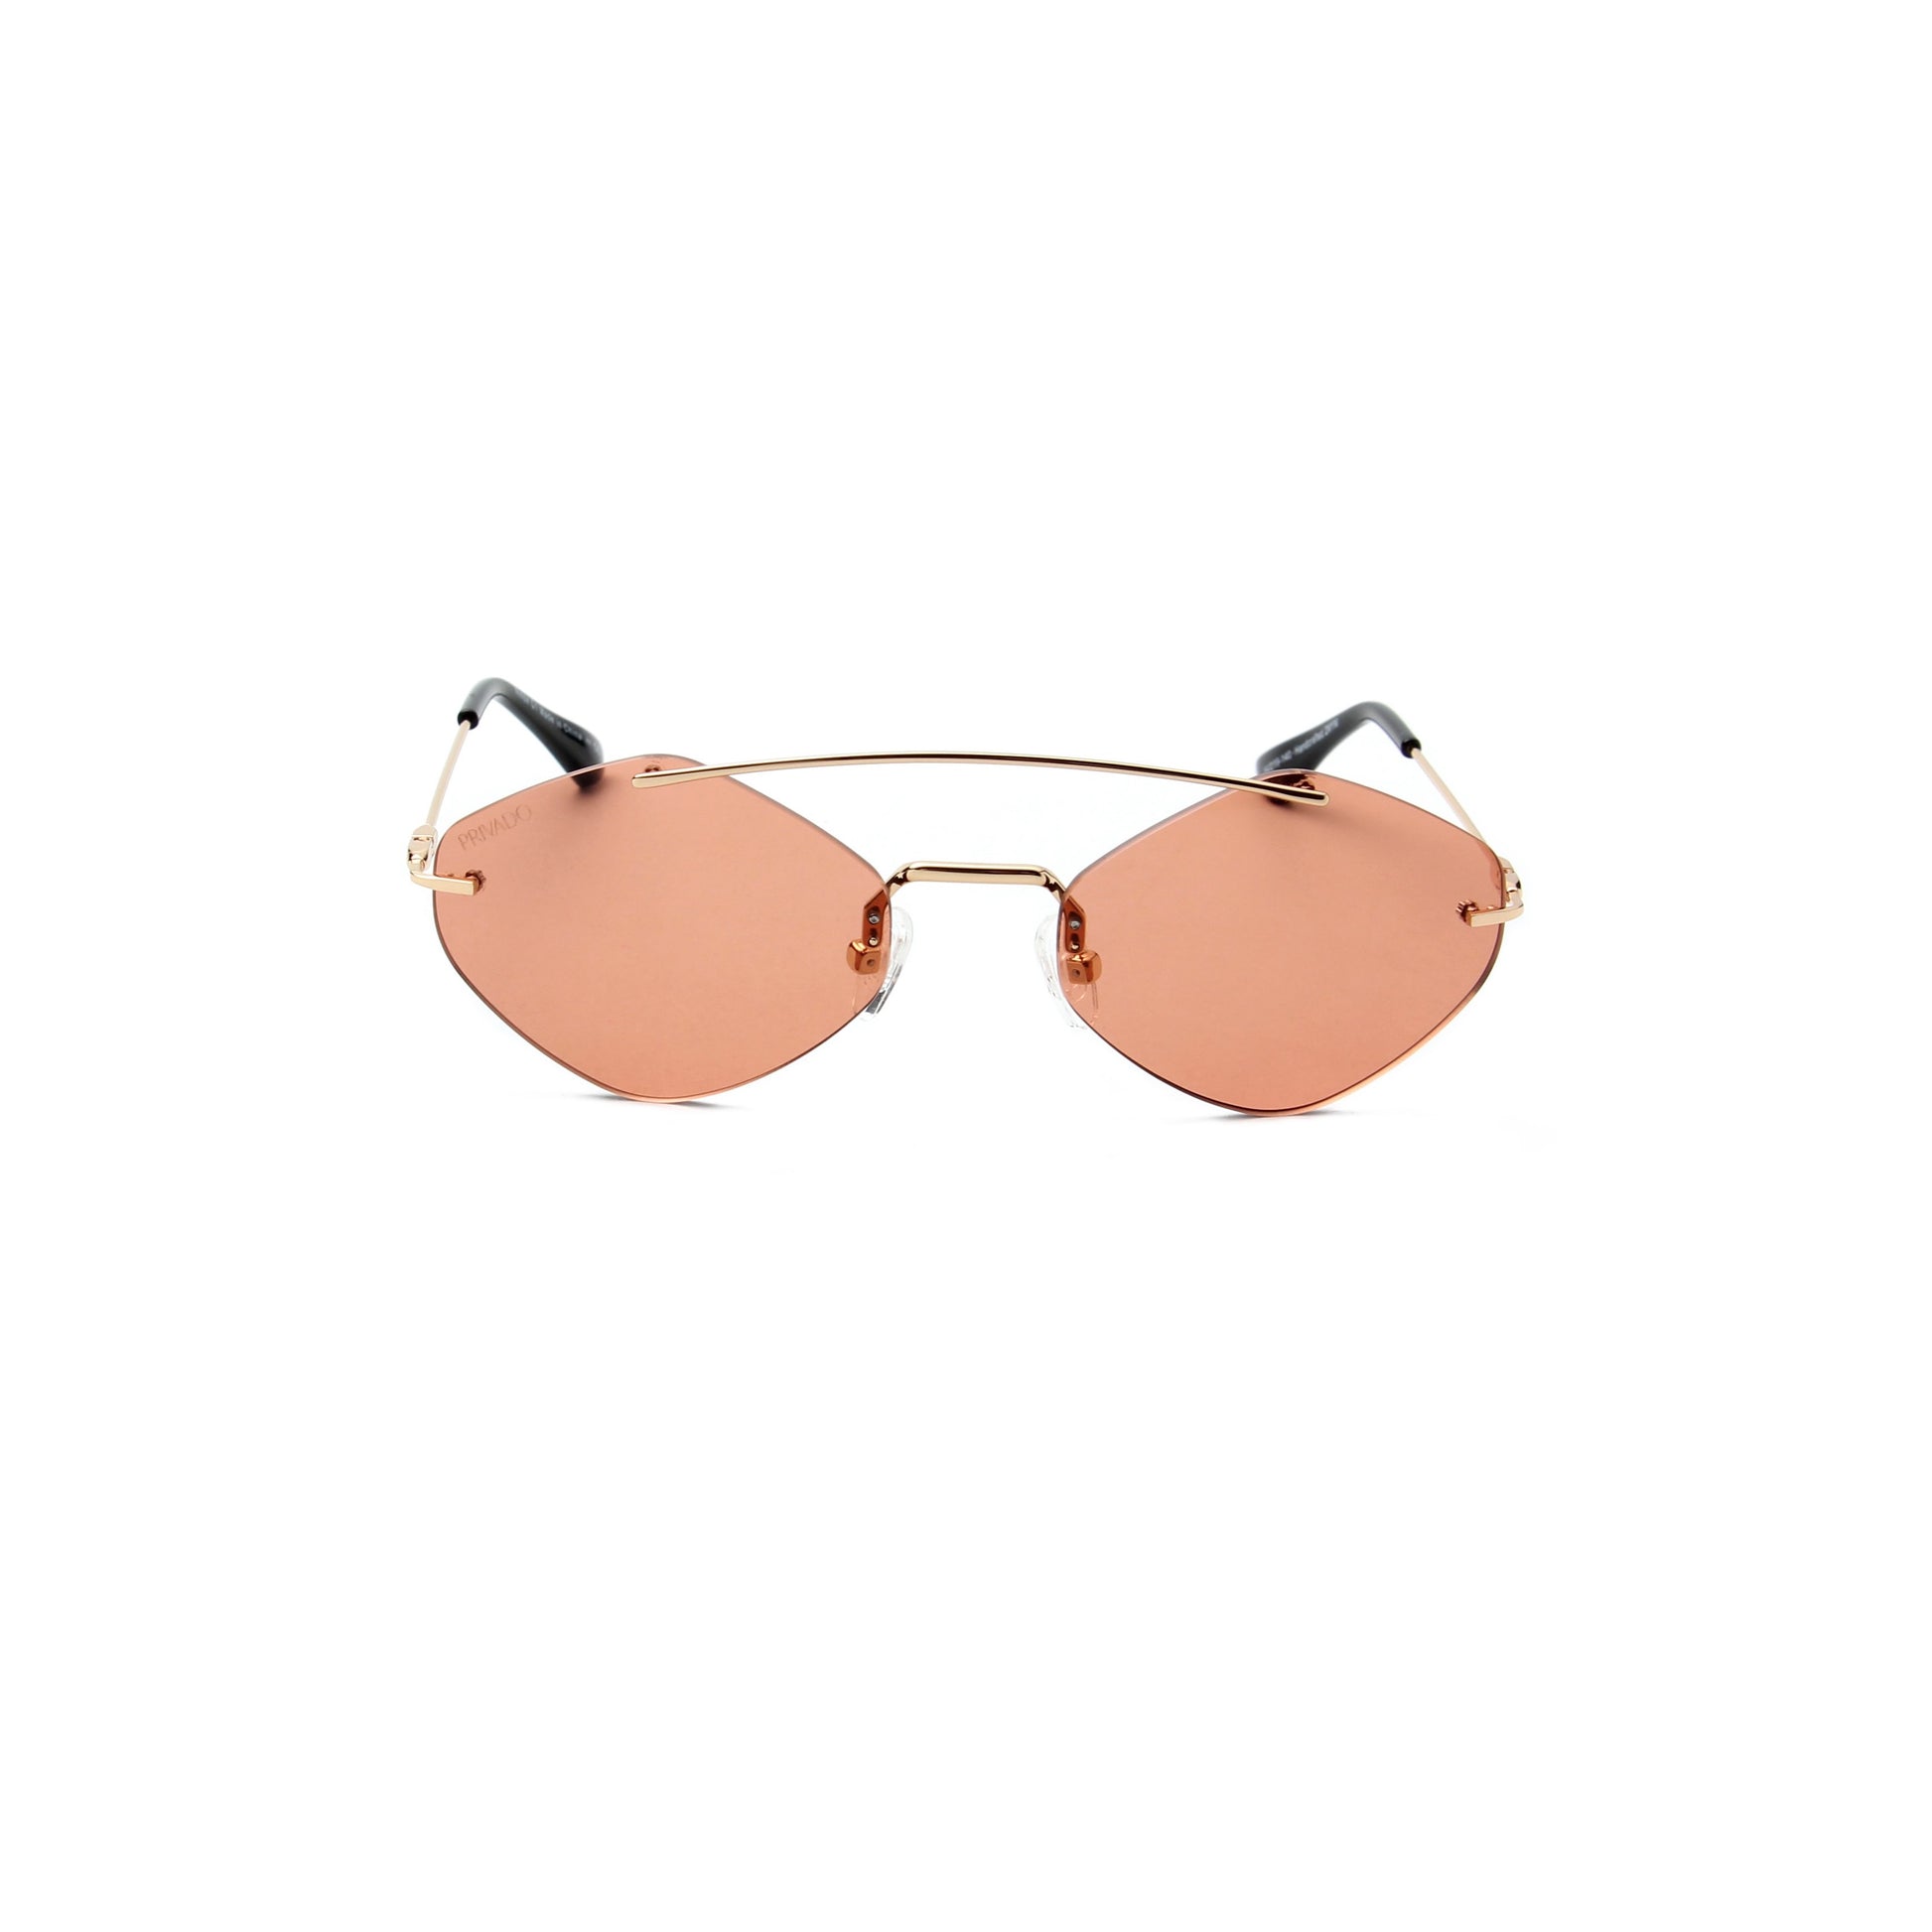 Privado Ninox gold sunglasses,metal frame,grey nylon lens,UV400 protected with anti-reflective coating